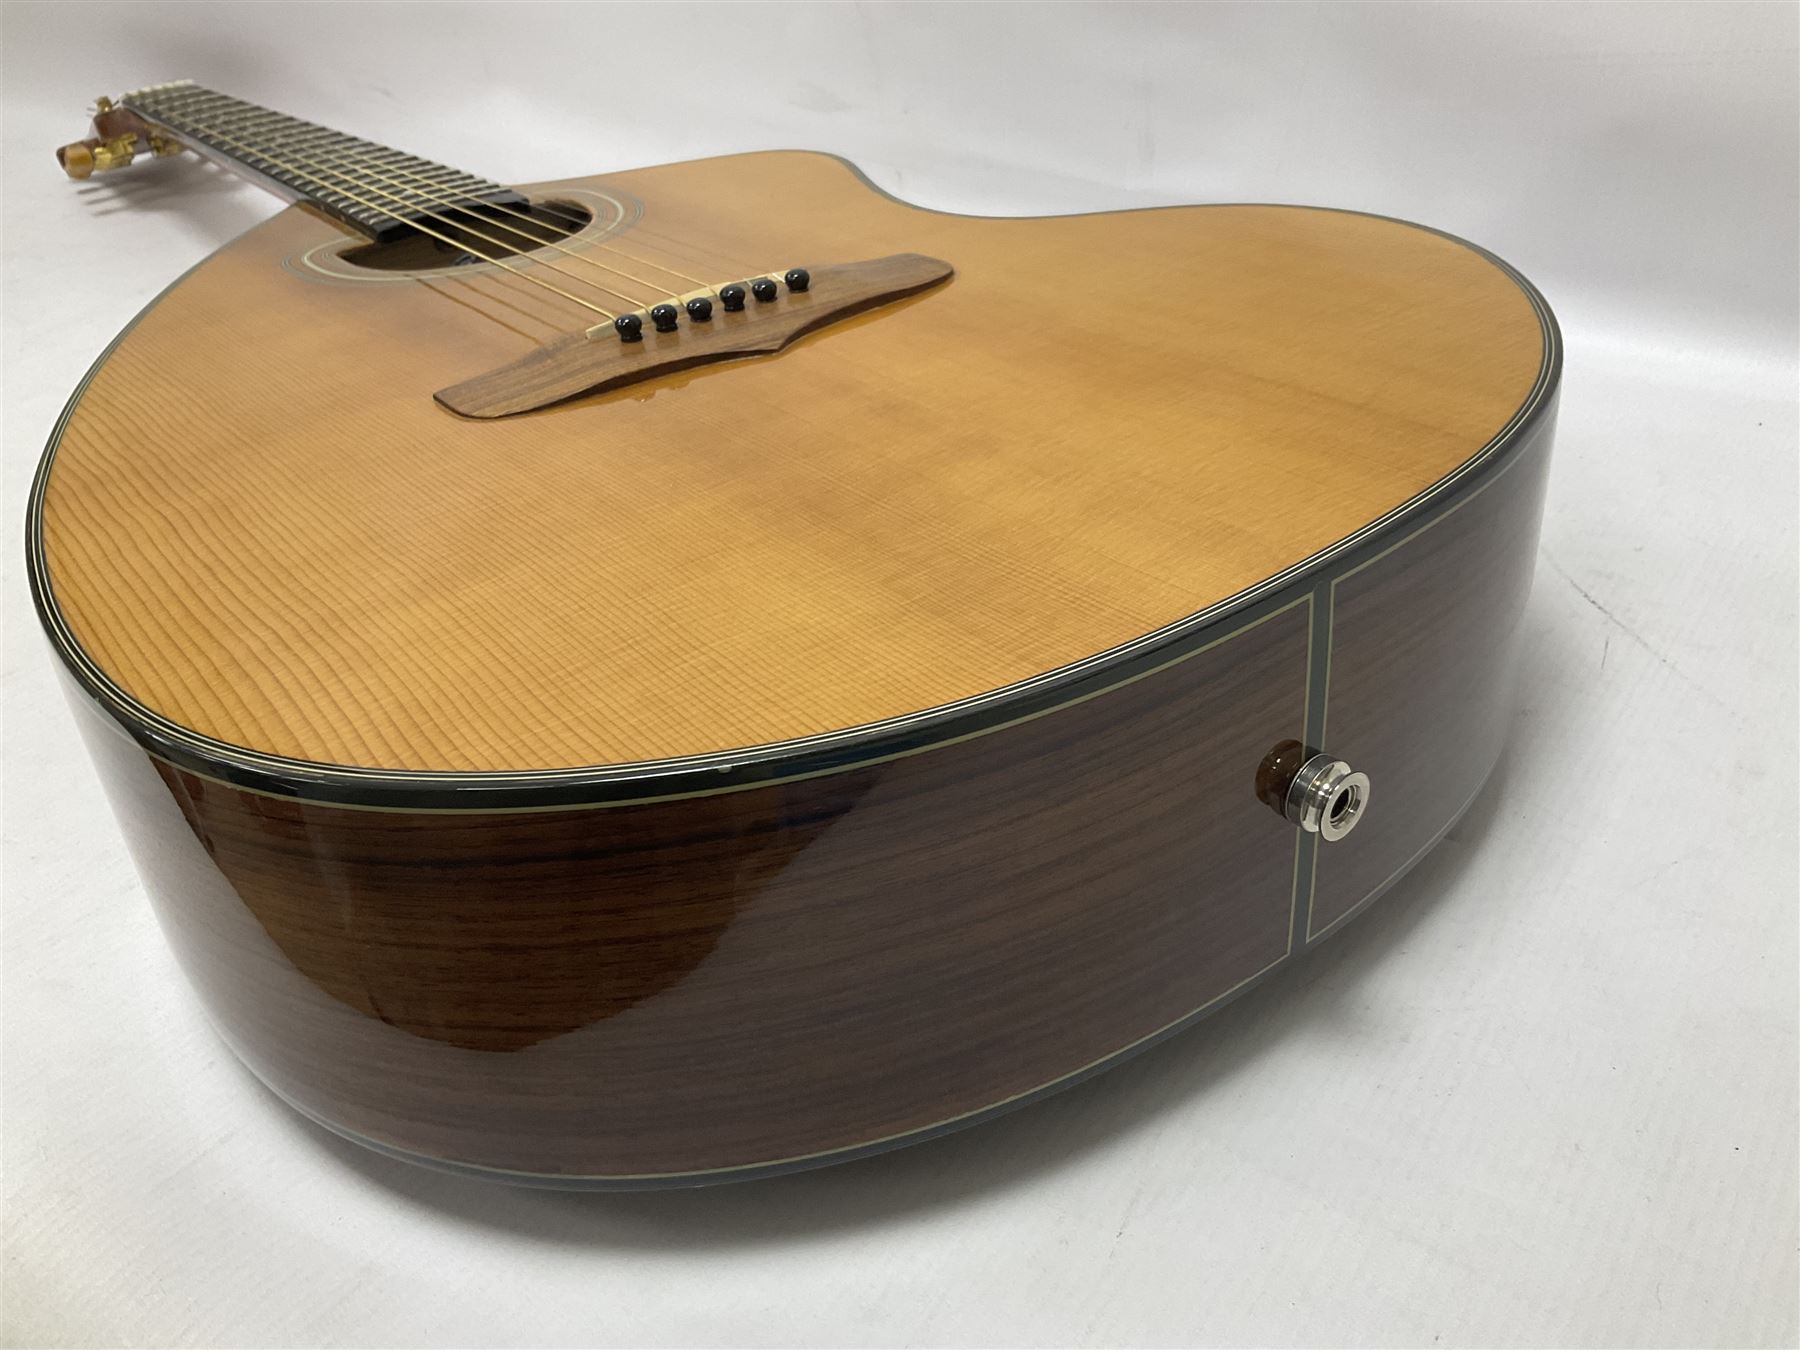 Brazilian Giannini Craviola six string acoustic guitar - Image 19 of 21